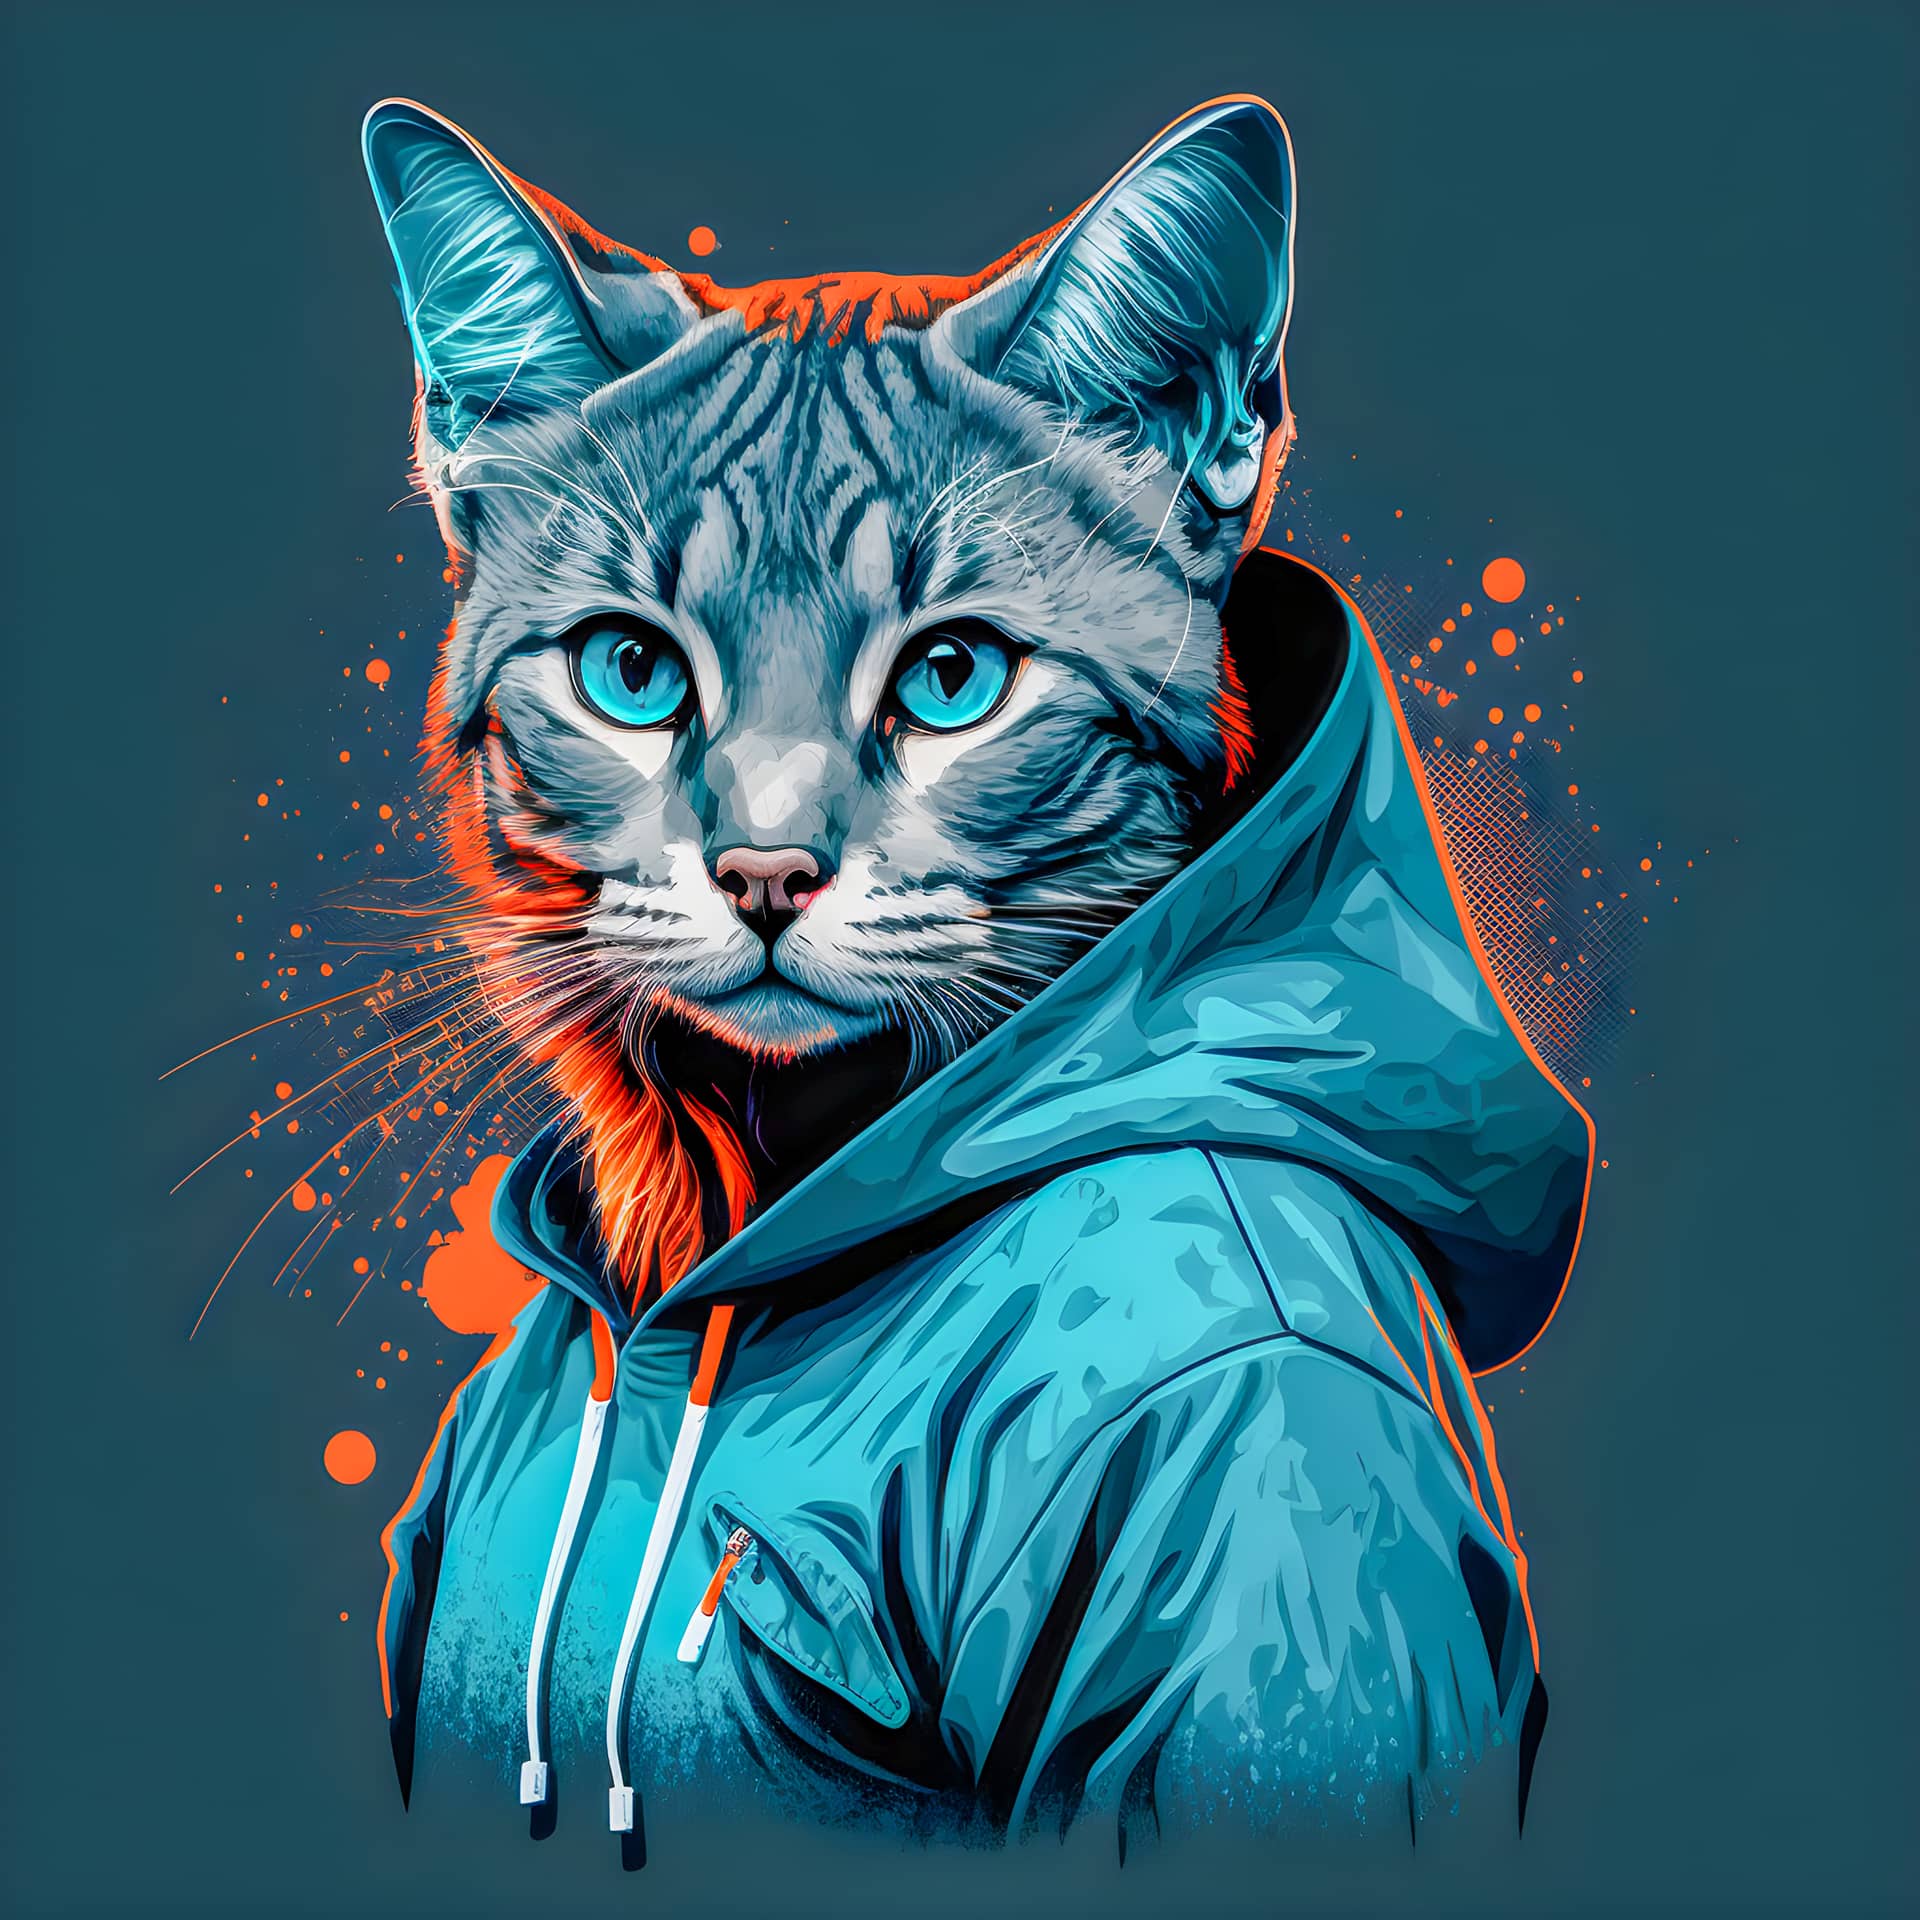 Cute pop art cat illustration hand drawn balanced art profile picture